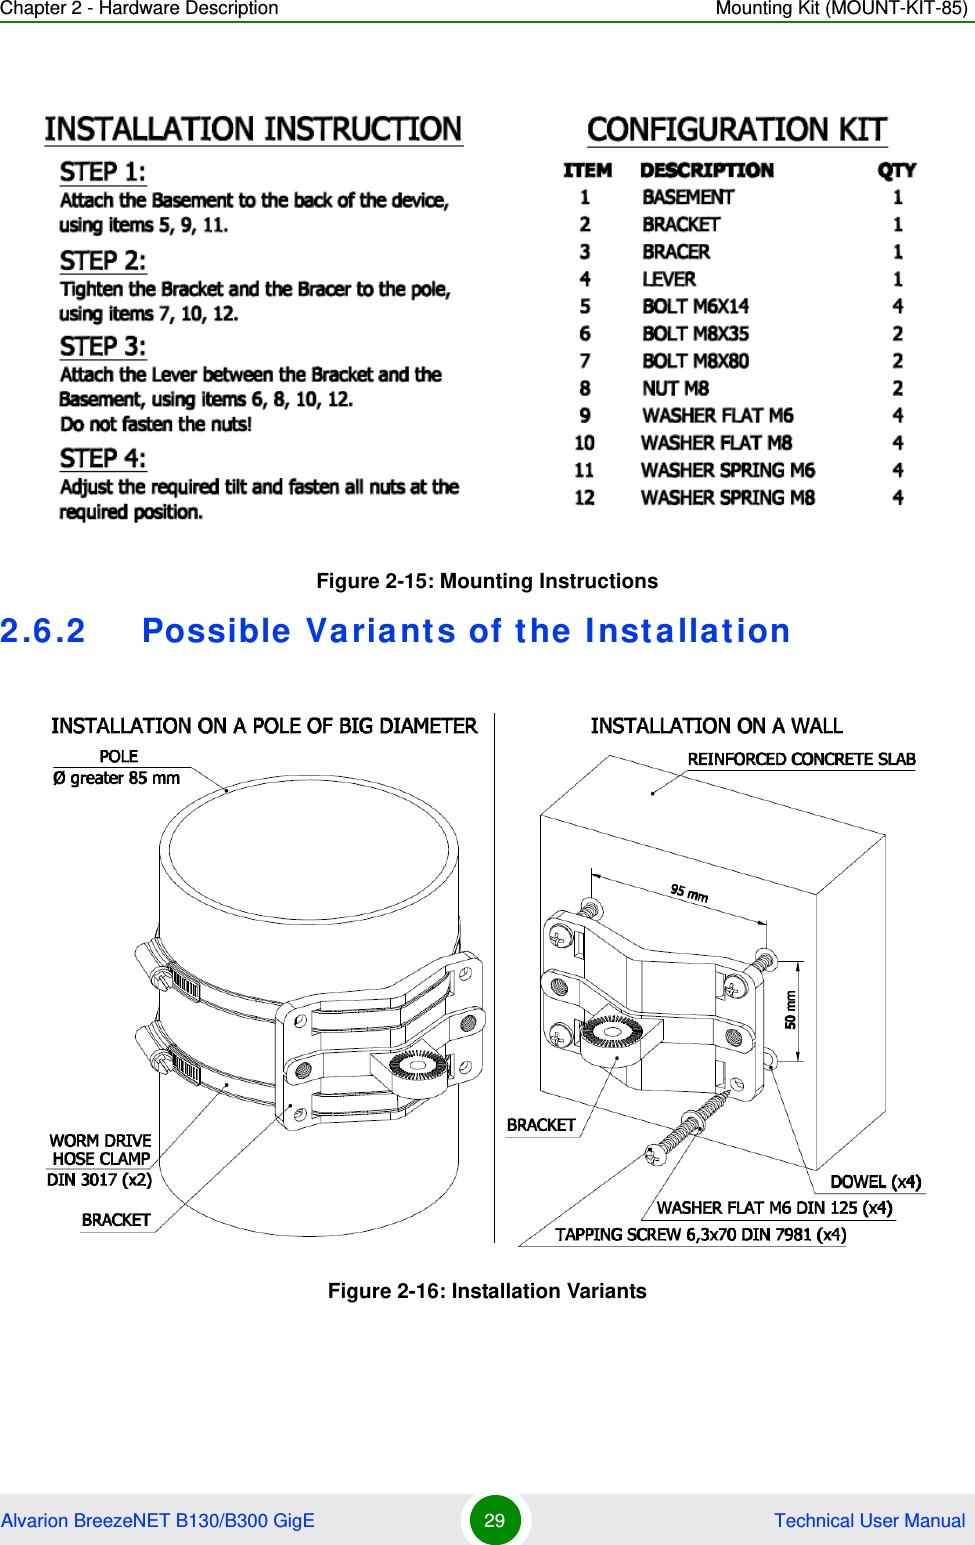 Chapter 2 - Hardware Description Mounting Kit (MOUNT-KIT-85)Alvarion BreezeNET B130/B300 GigE 29  Technical User Manual2.6.2 Possible Variants of the InstallationFigure 2-15: Mounting InstructionsFigure 2-16: Installation Variants